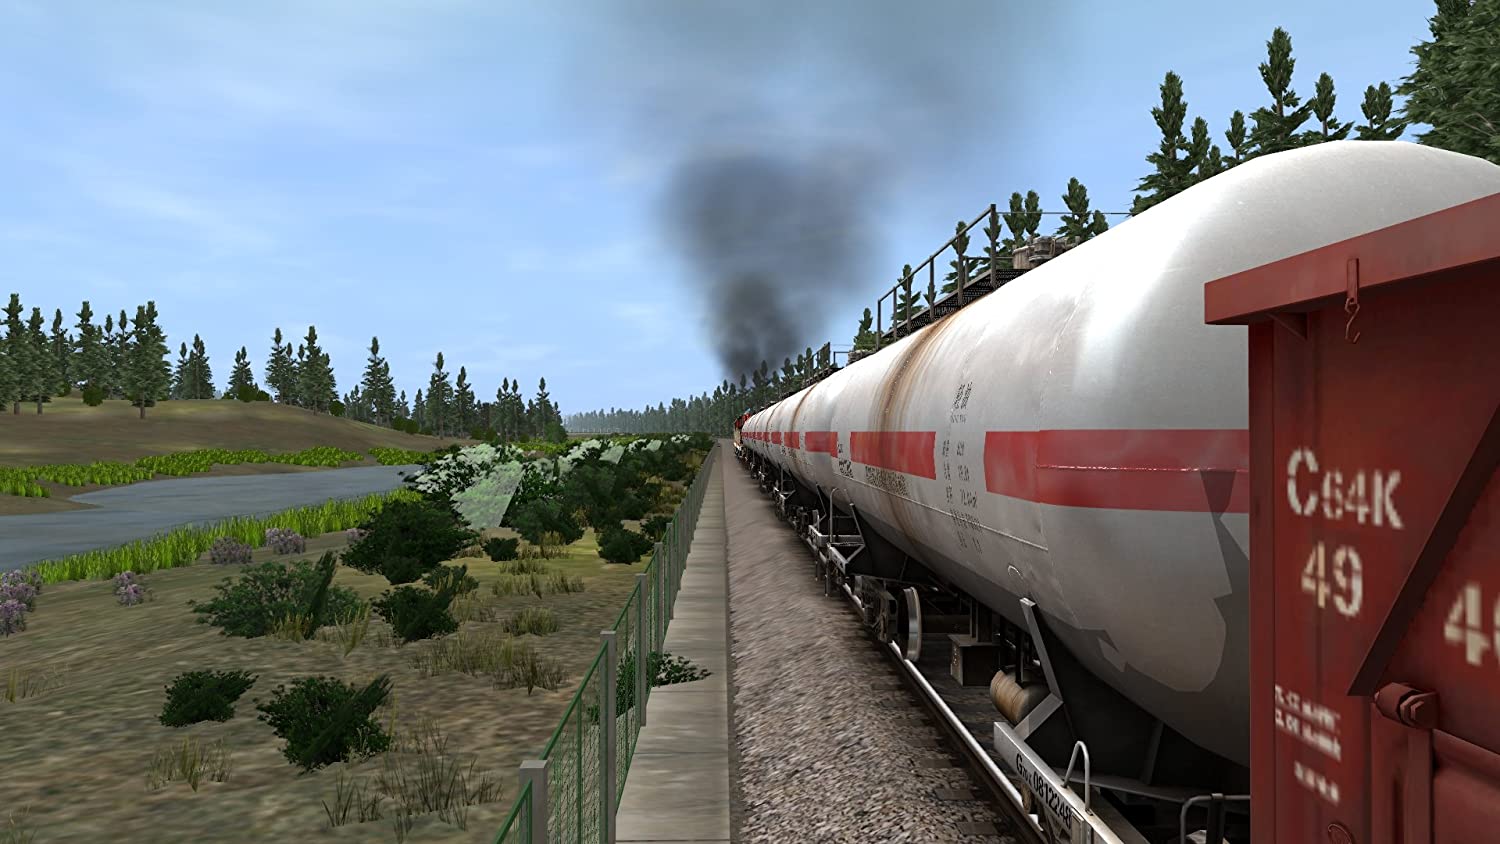 trainz simulator 2012 for mac